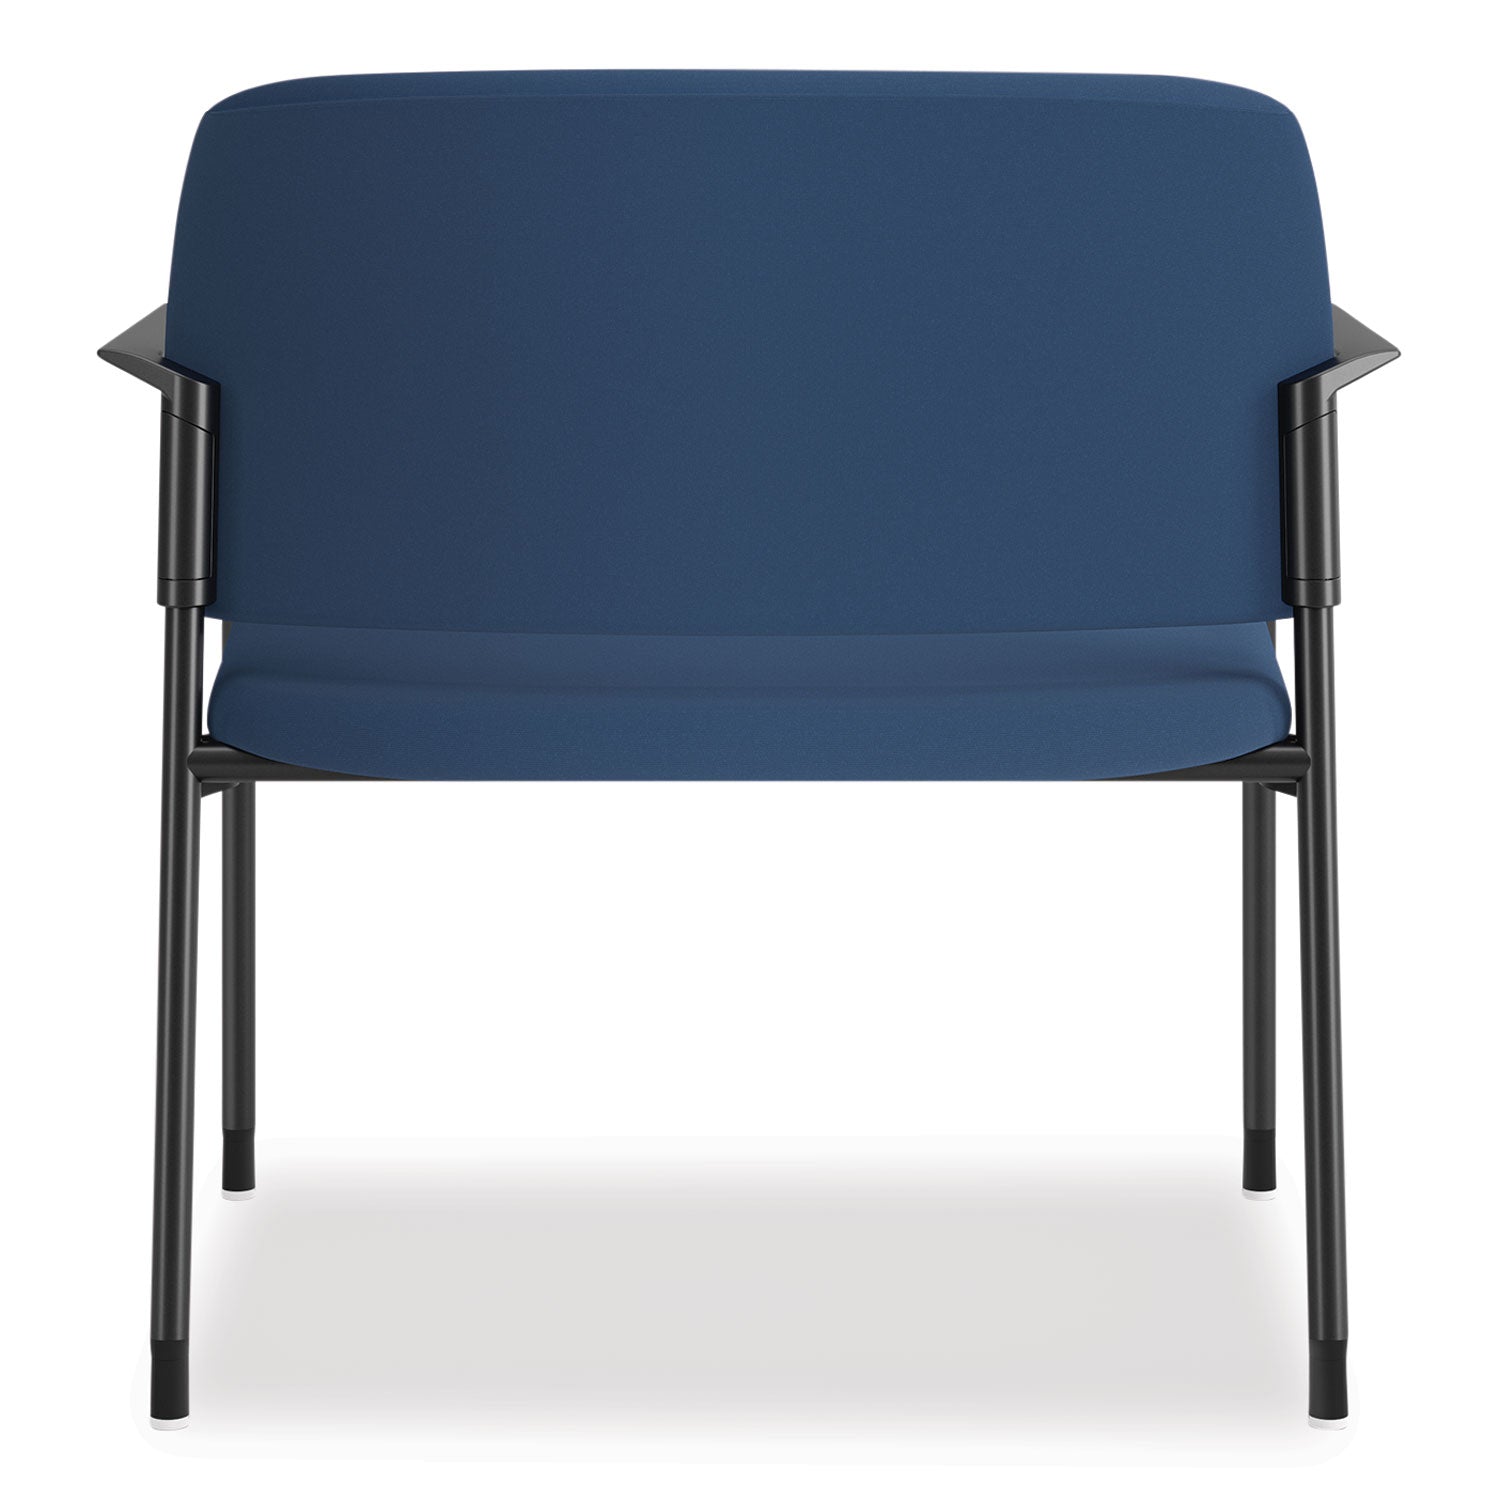 accommodate-series-bariatric-chair-with-arms-335-x-215-x-325-elysian-seat-elysian-back-charblack-legs_honsb50fesx04cb - 2